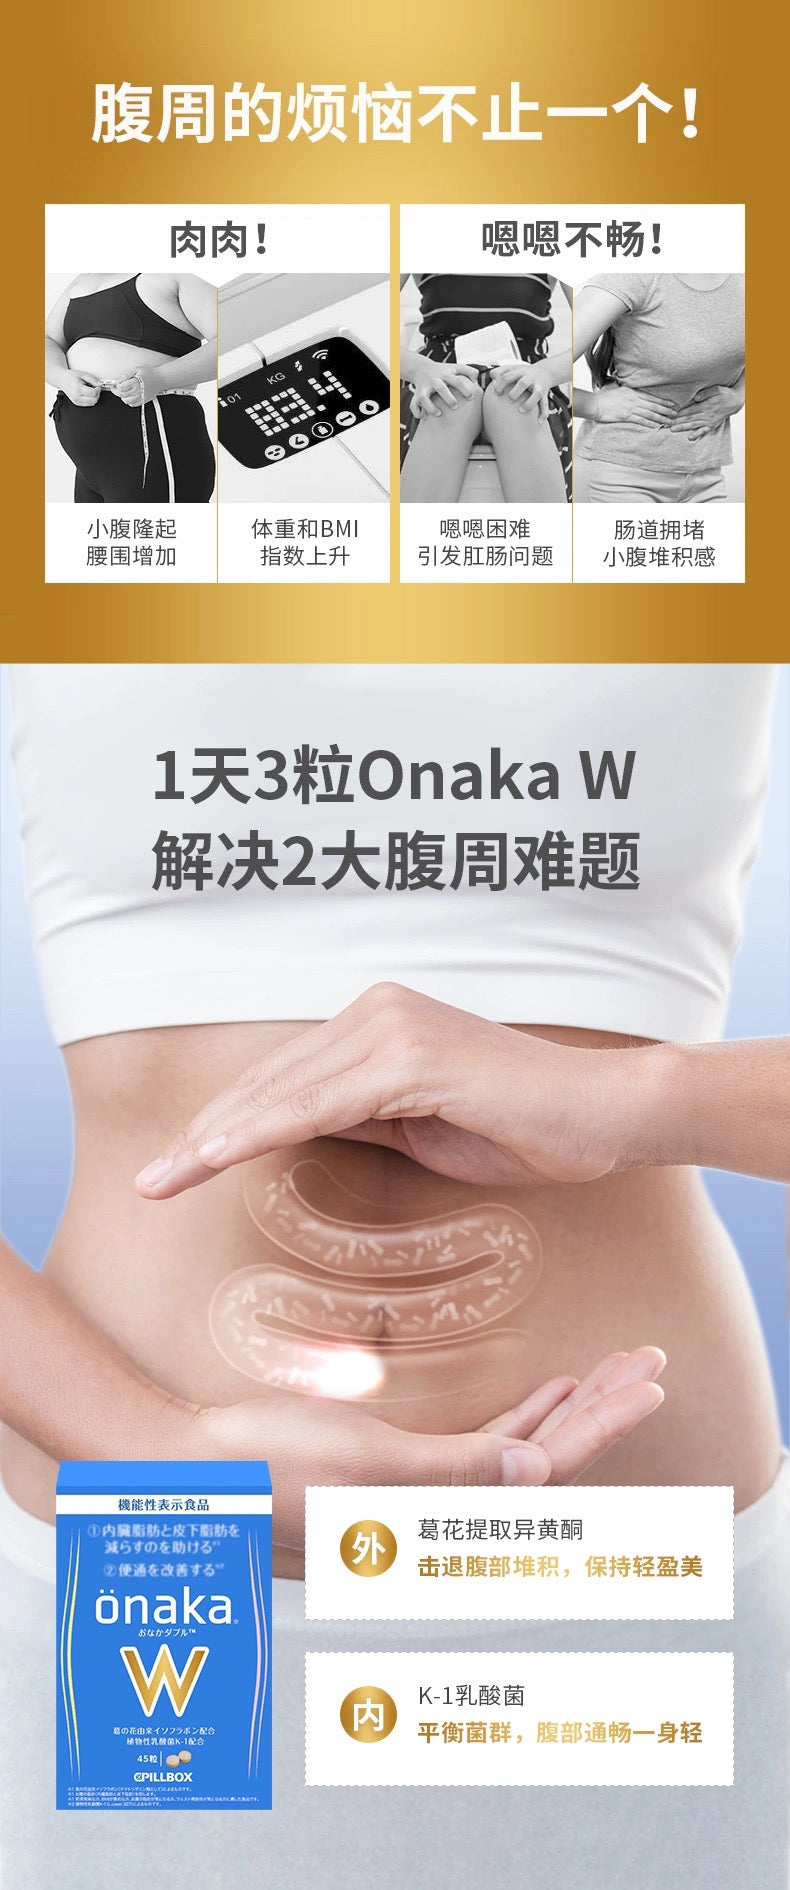 PILLBOX ONAKA W金装加强版减小腹通便酵素45粒装